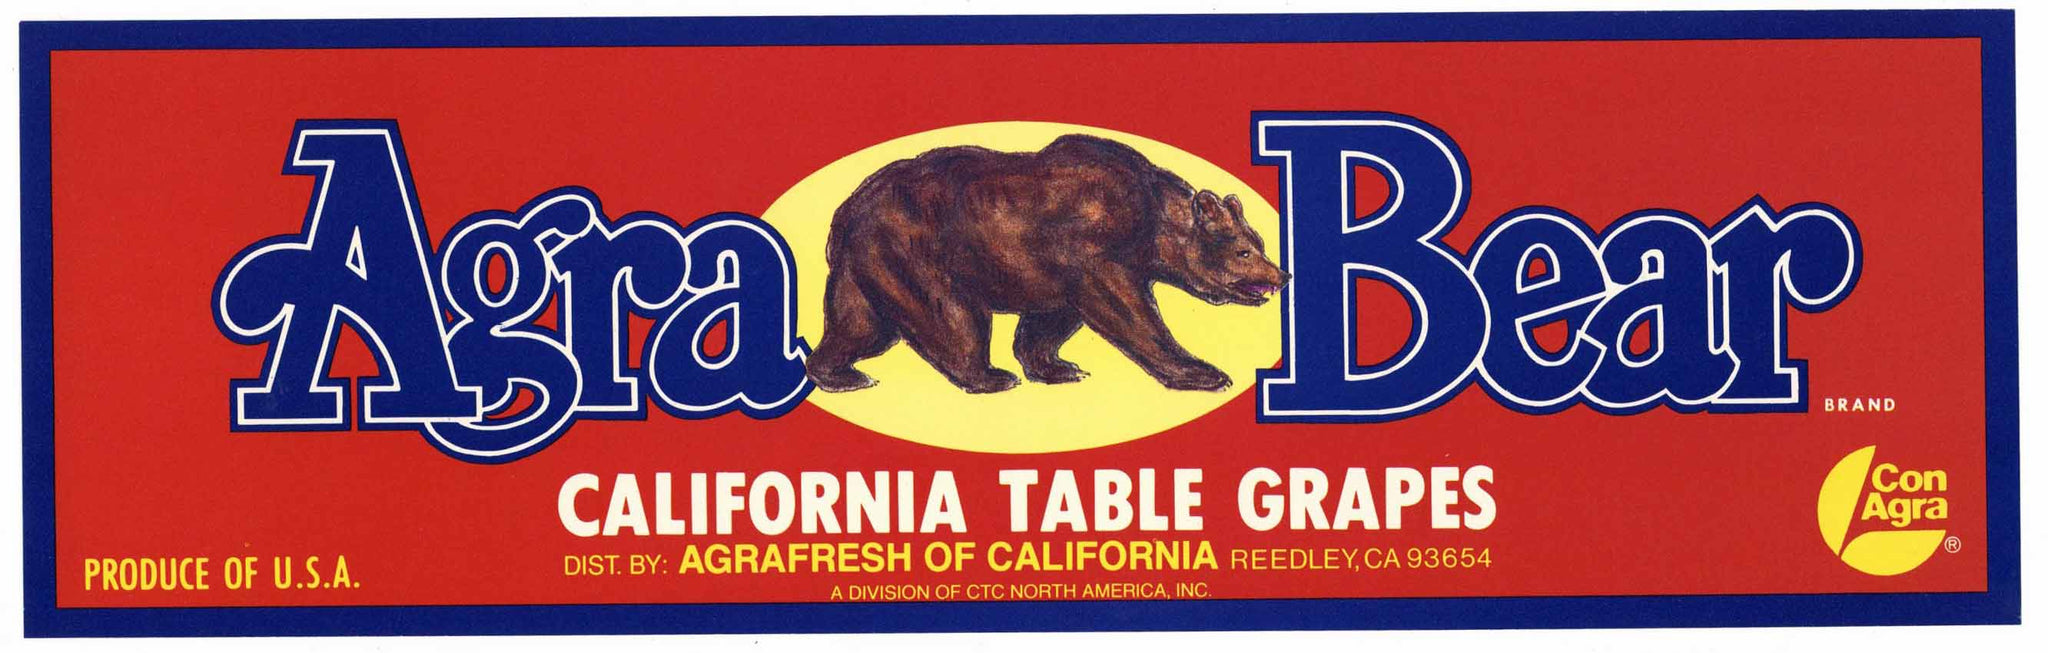 Agra Bear Brand Vintage Reedley Grape Crate Label